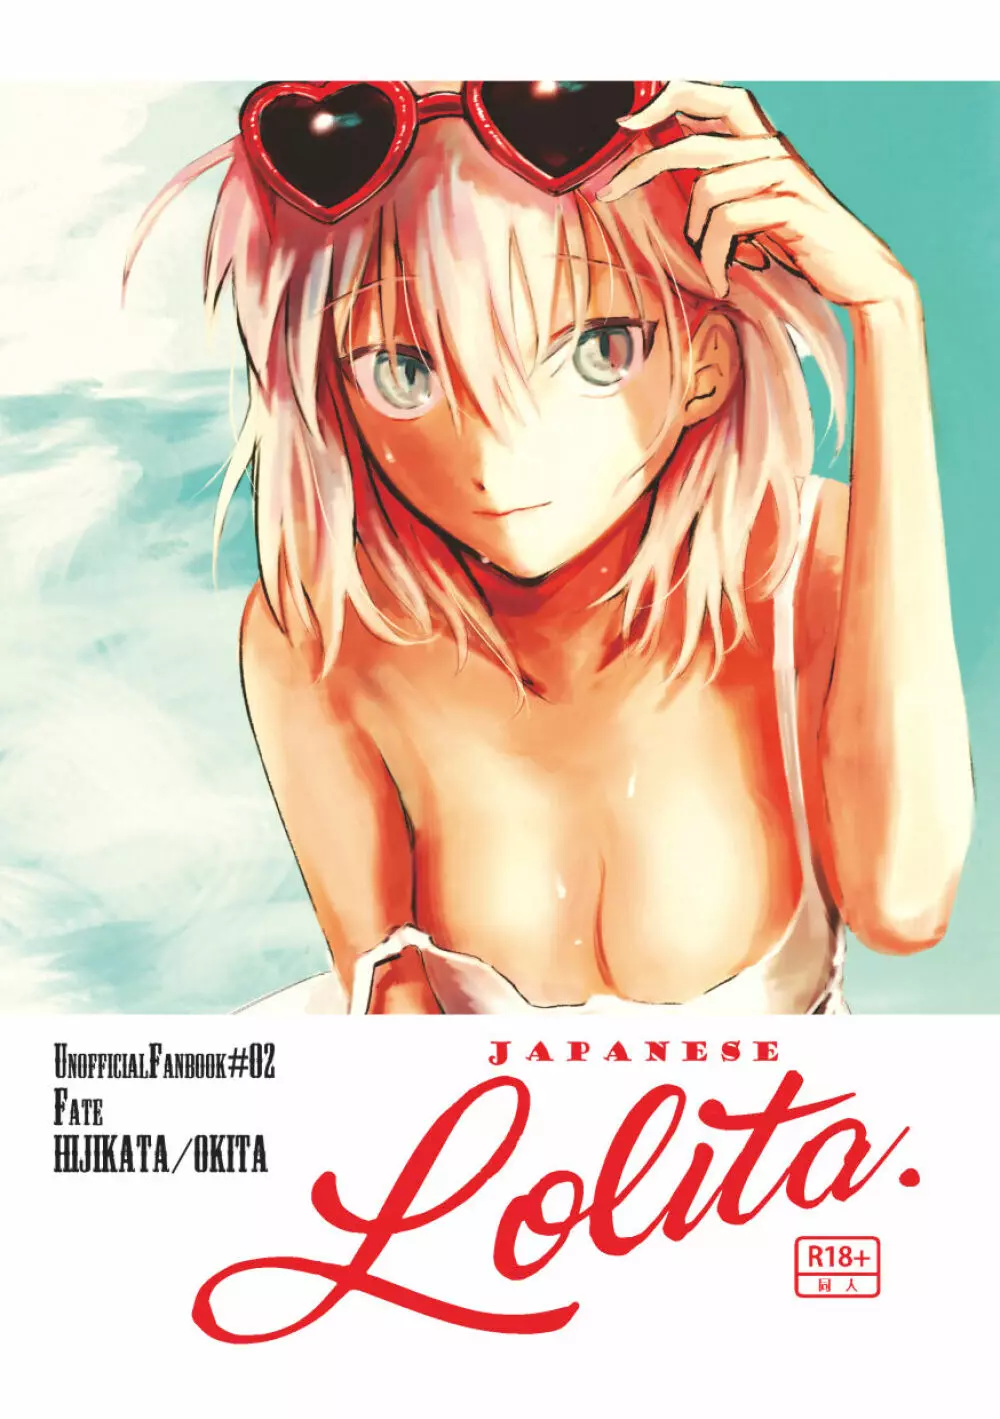 JAPANESE Lolita. - page1